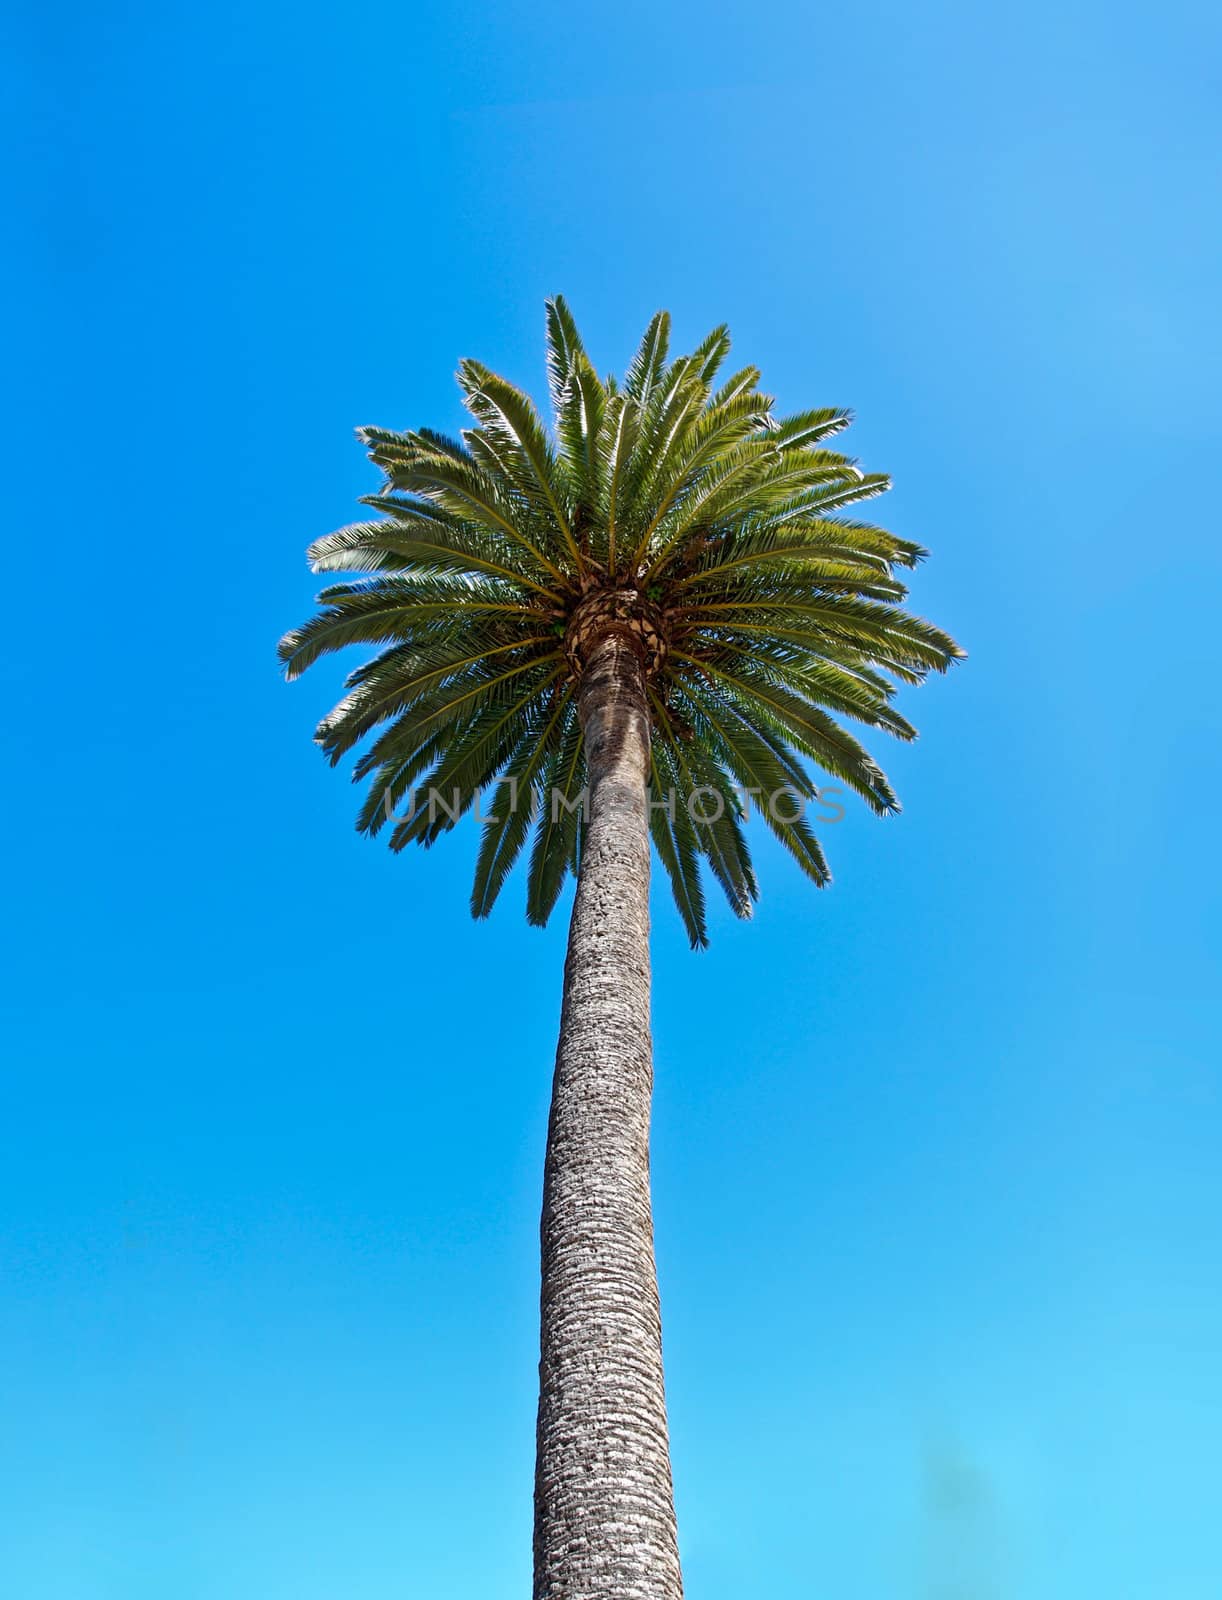 Palm tree against a light blue sky.